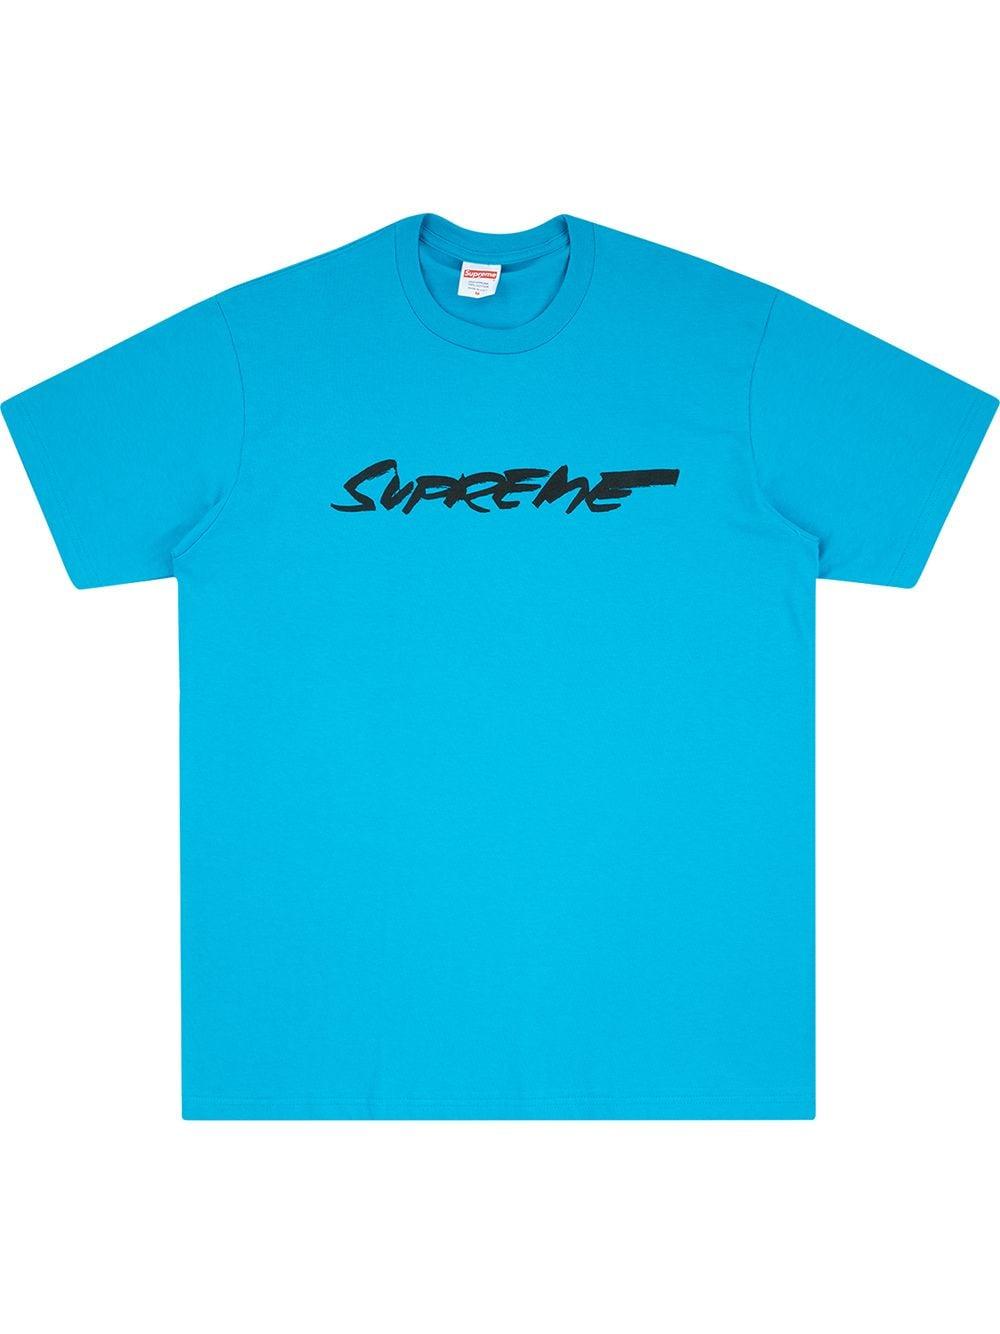 Supreme Cotton Futura Logo T-shirt in Blue for Men - Lyst